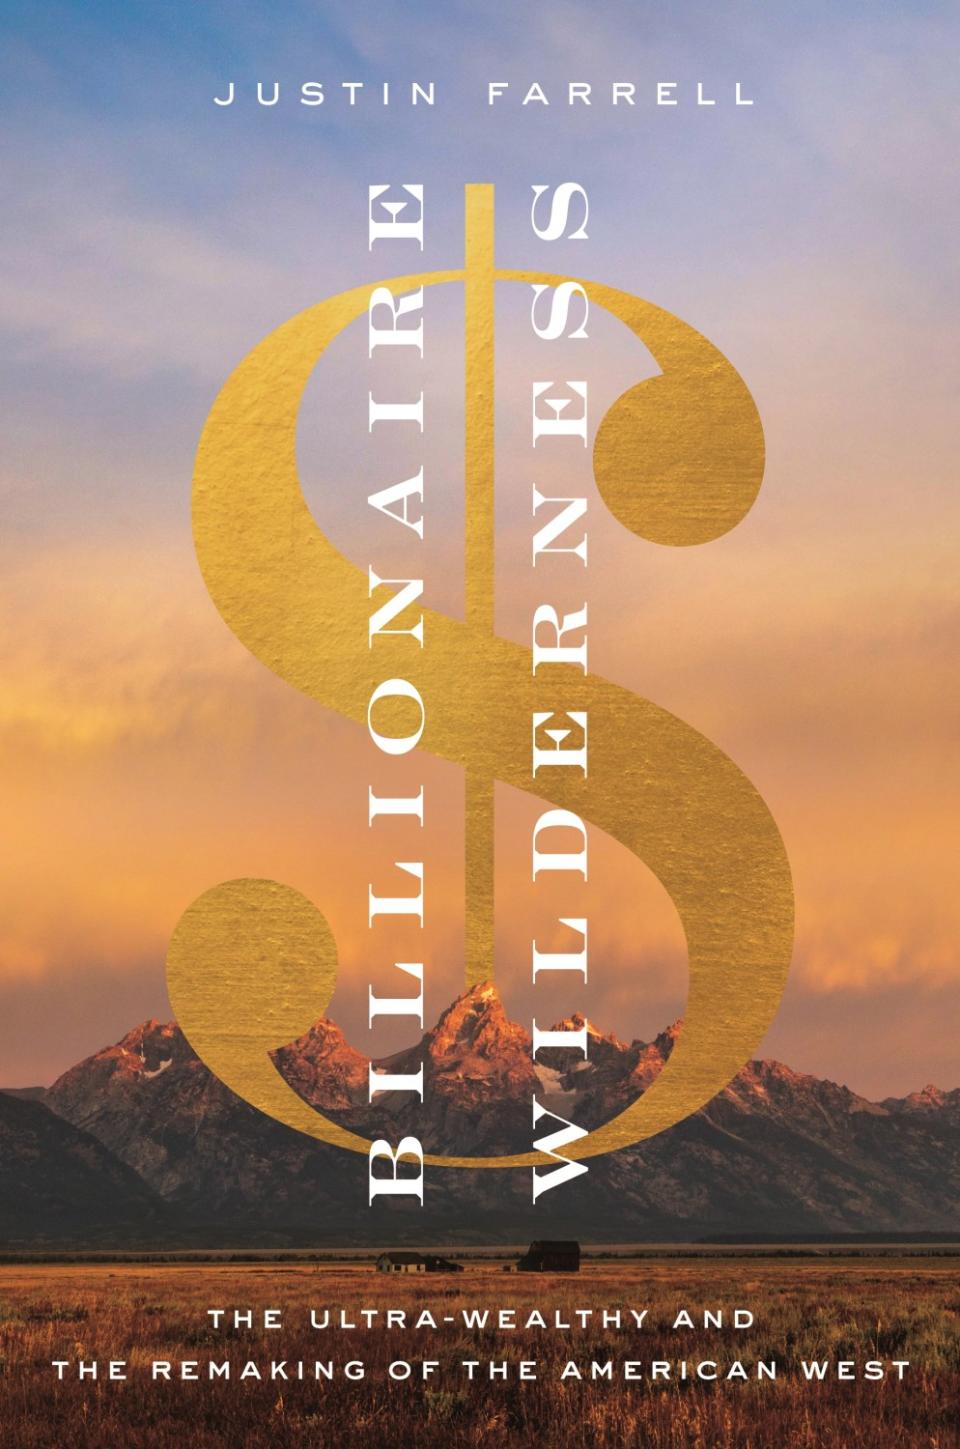 A book jacket for Justin Jarrell's "Billionaire Wilderness." Credit: Princeton University Press